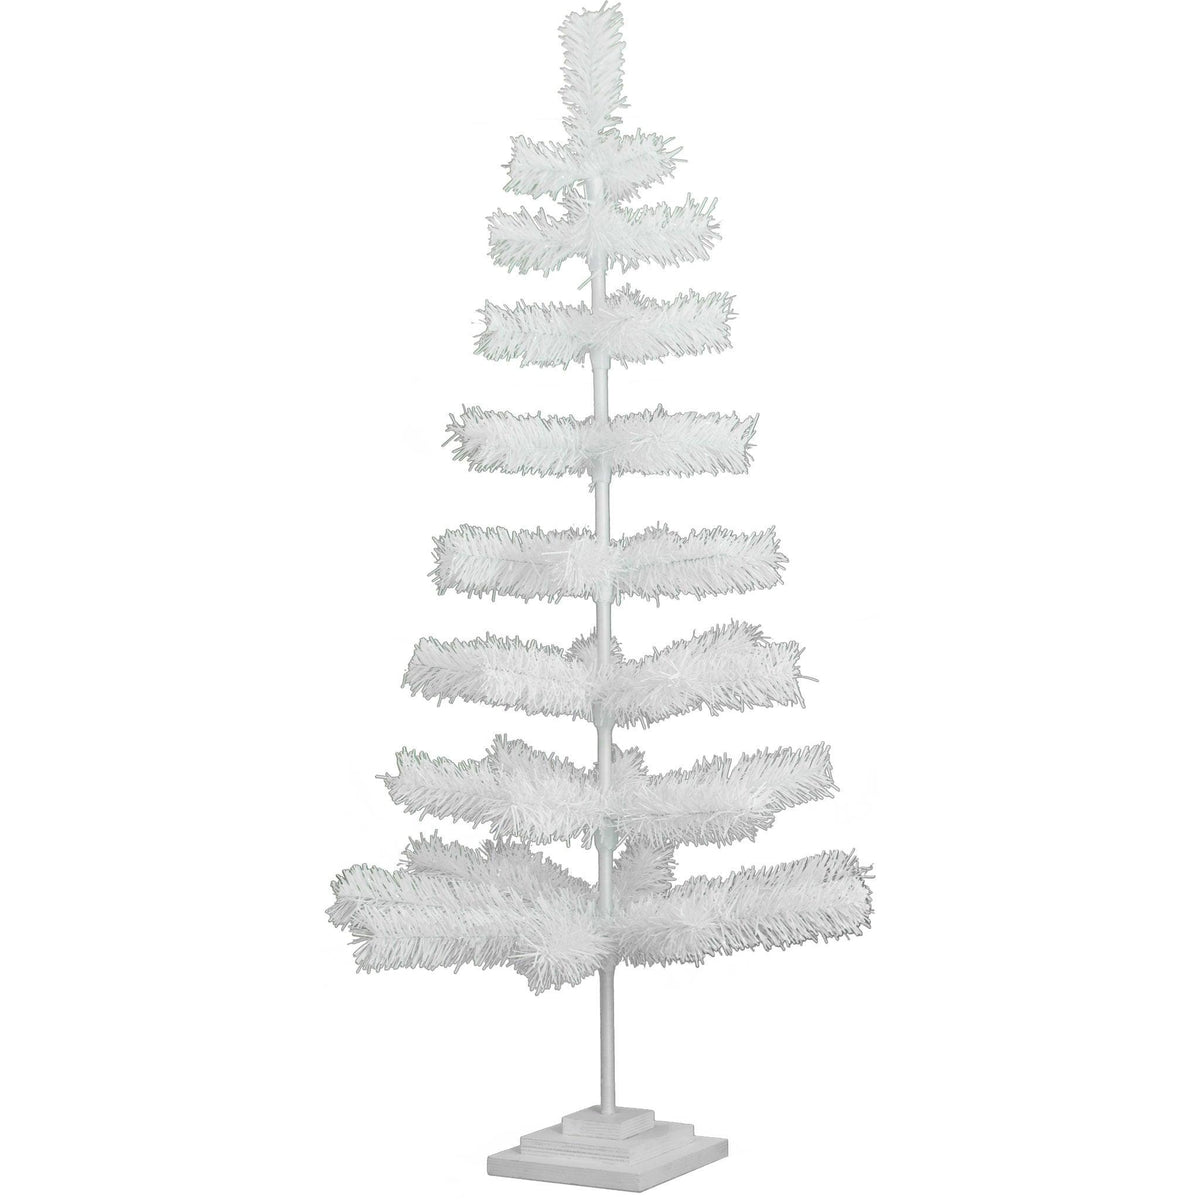 Lee Display's 4ft White Tinsel Christmas Tree on sale now at leedisplay.com